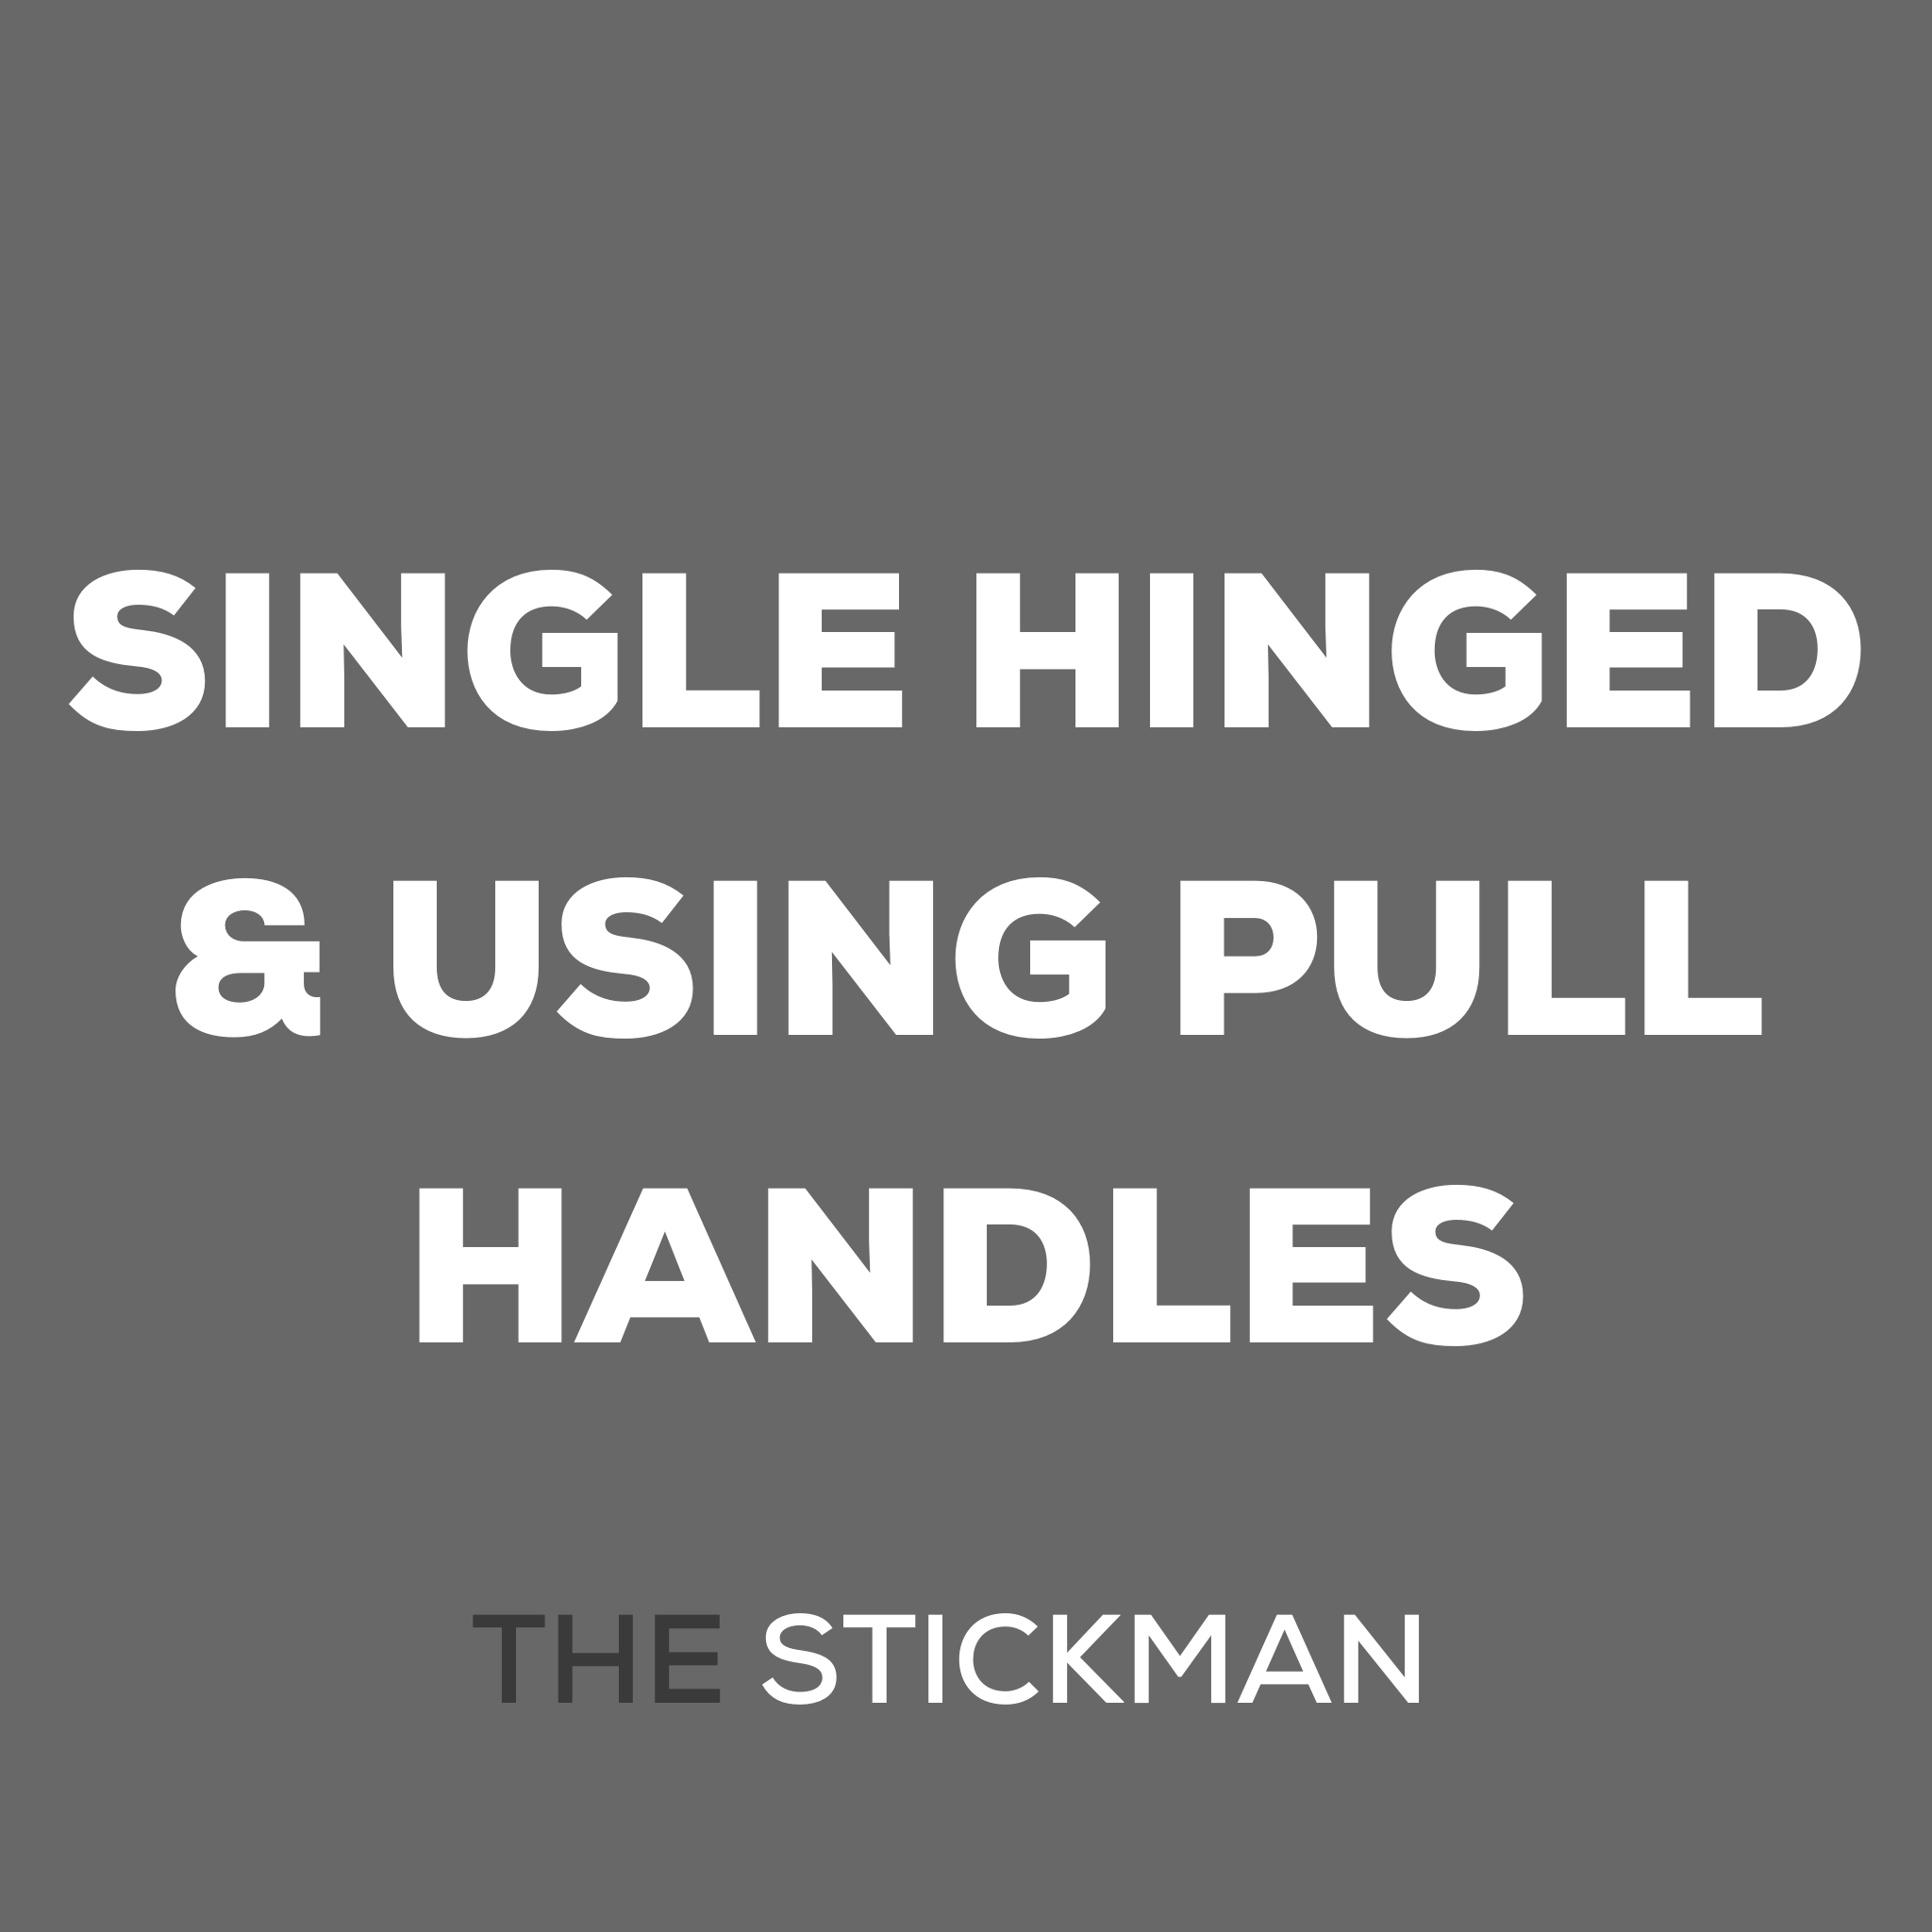 SINGLE HINGED & USING PULL HANDLES